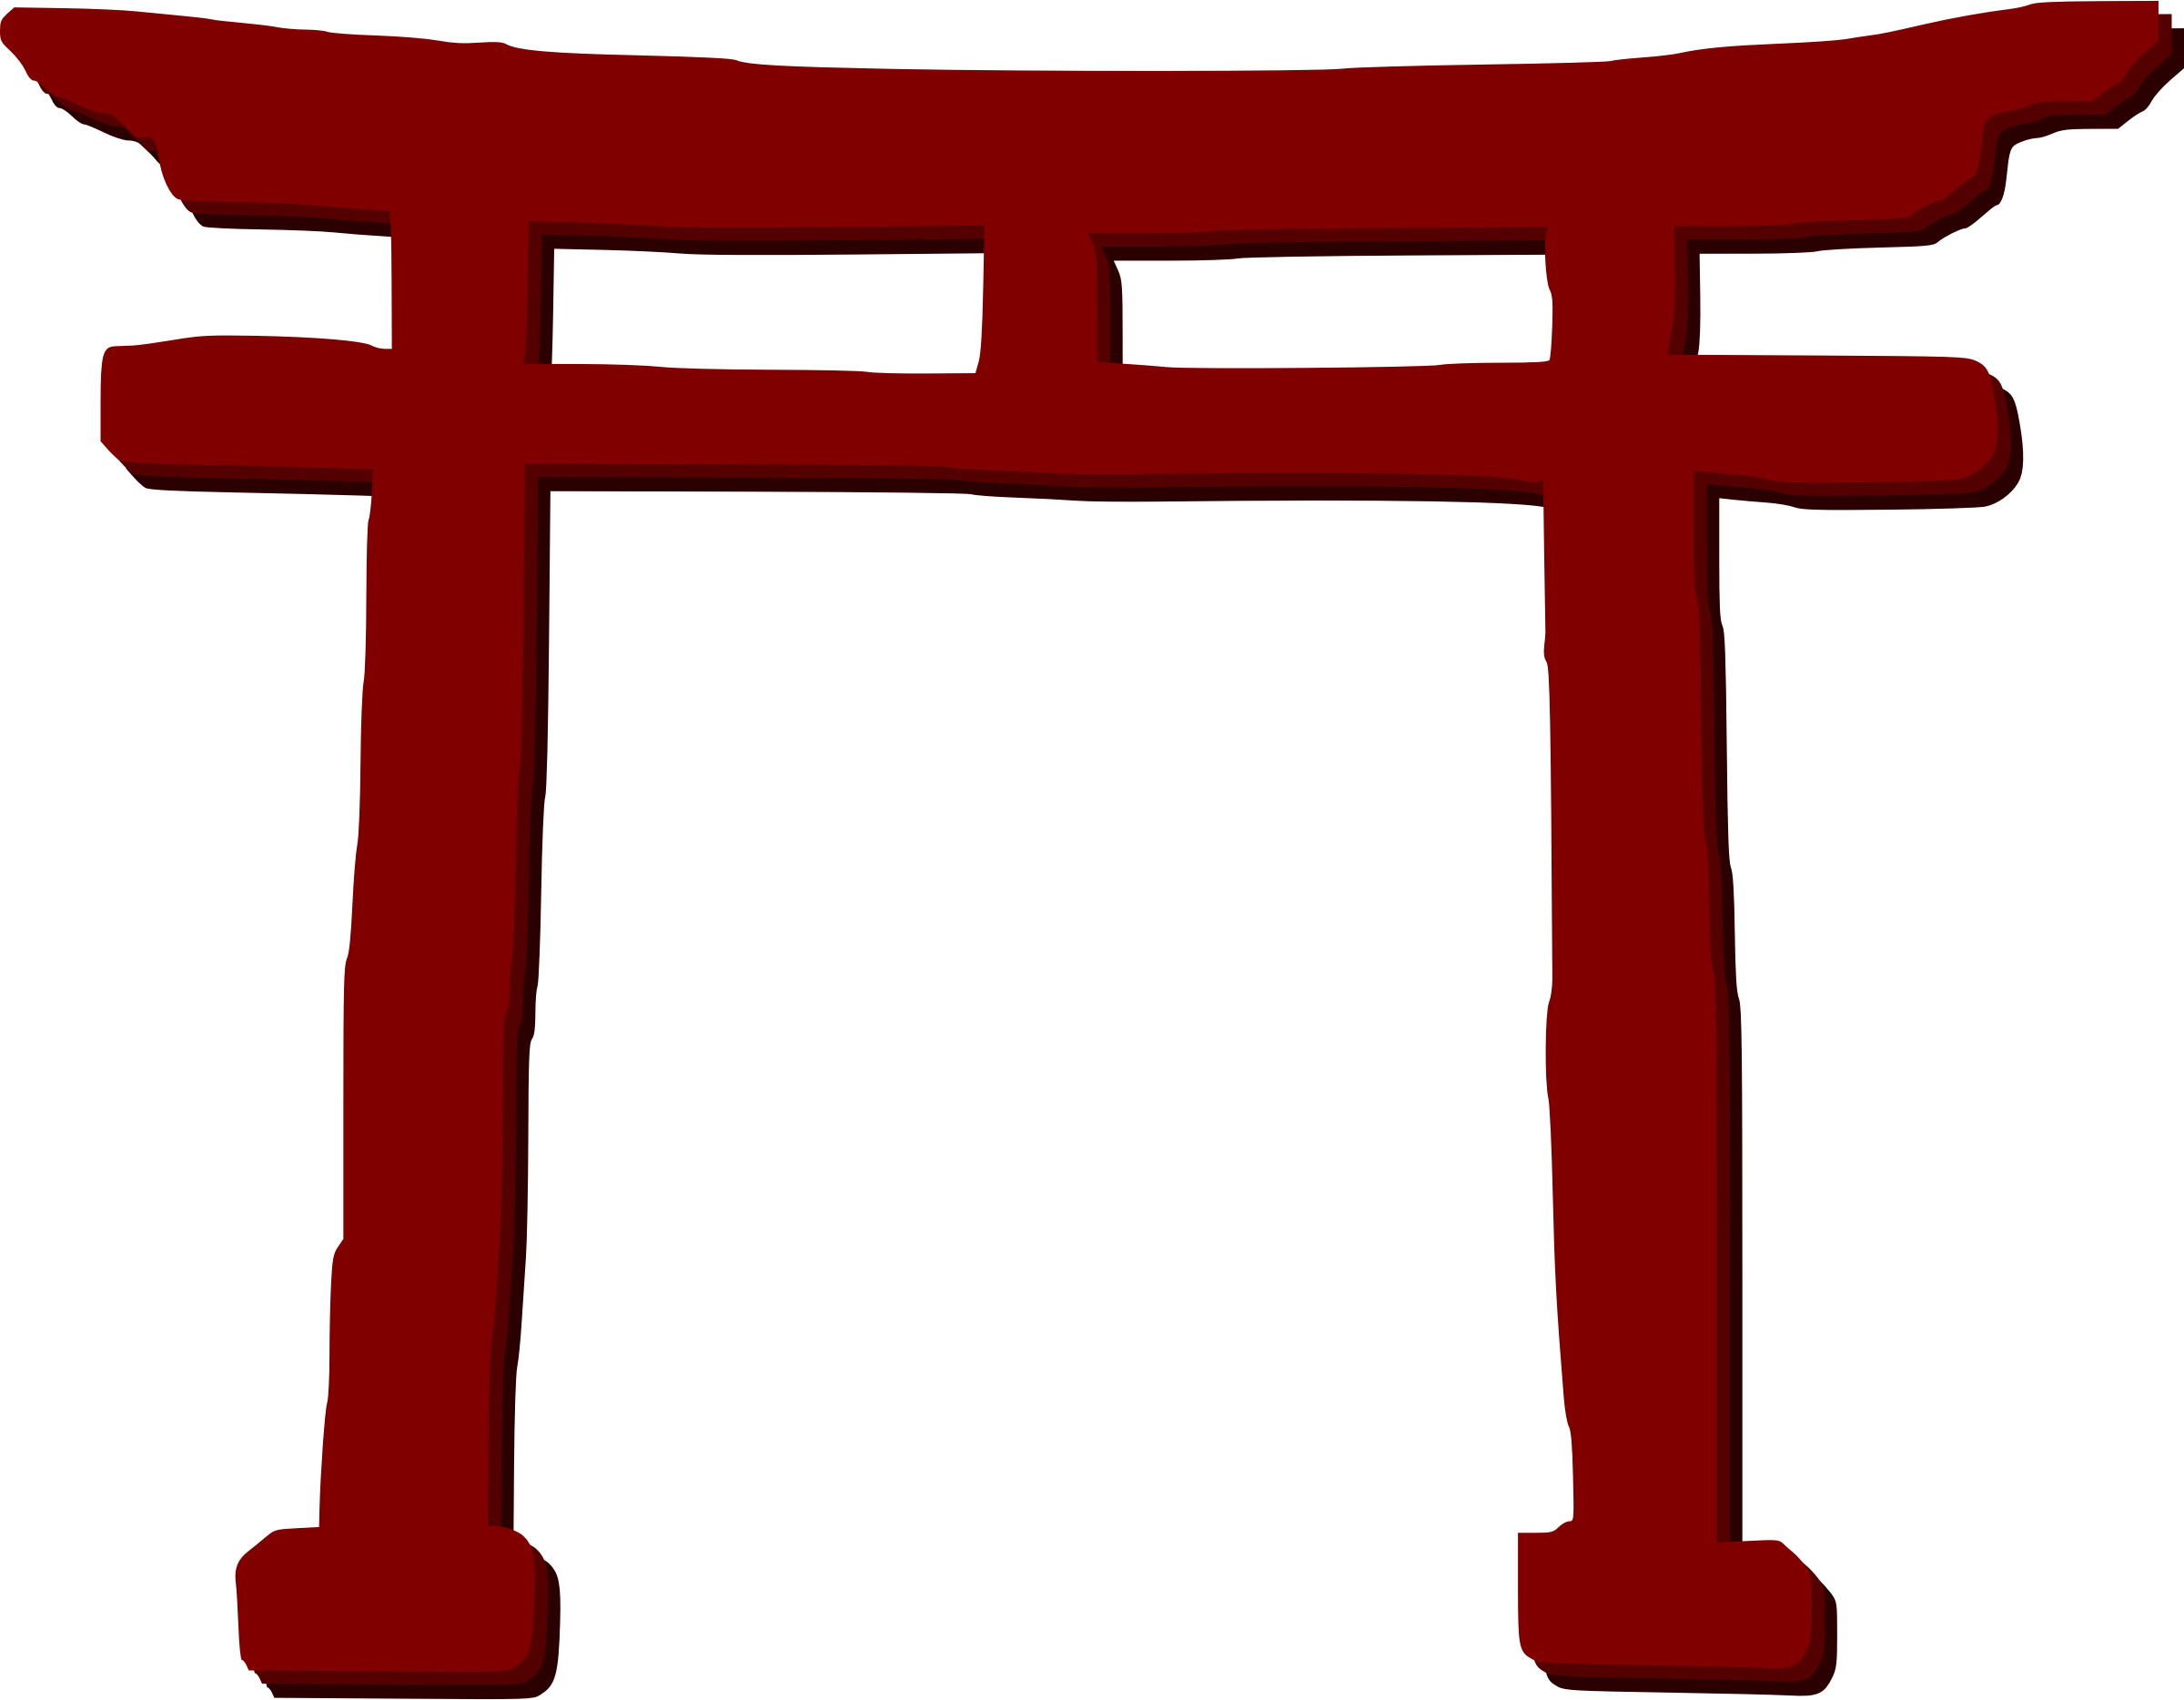 Drawing - Japanese Torii Gate